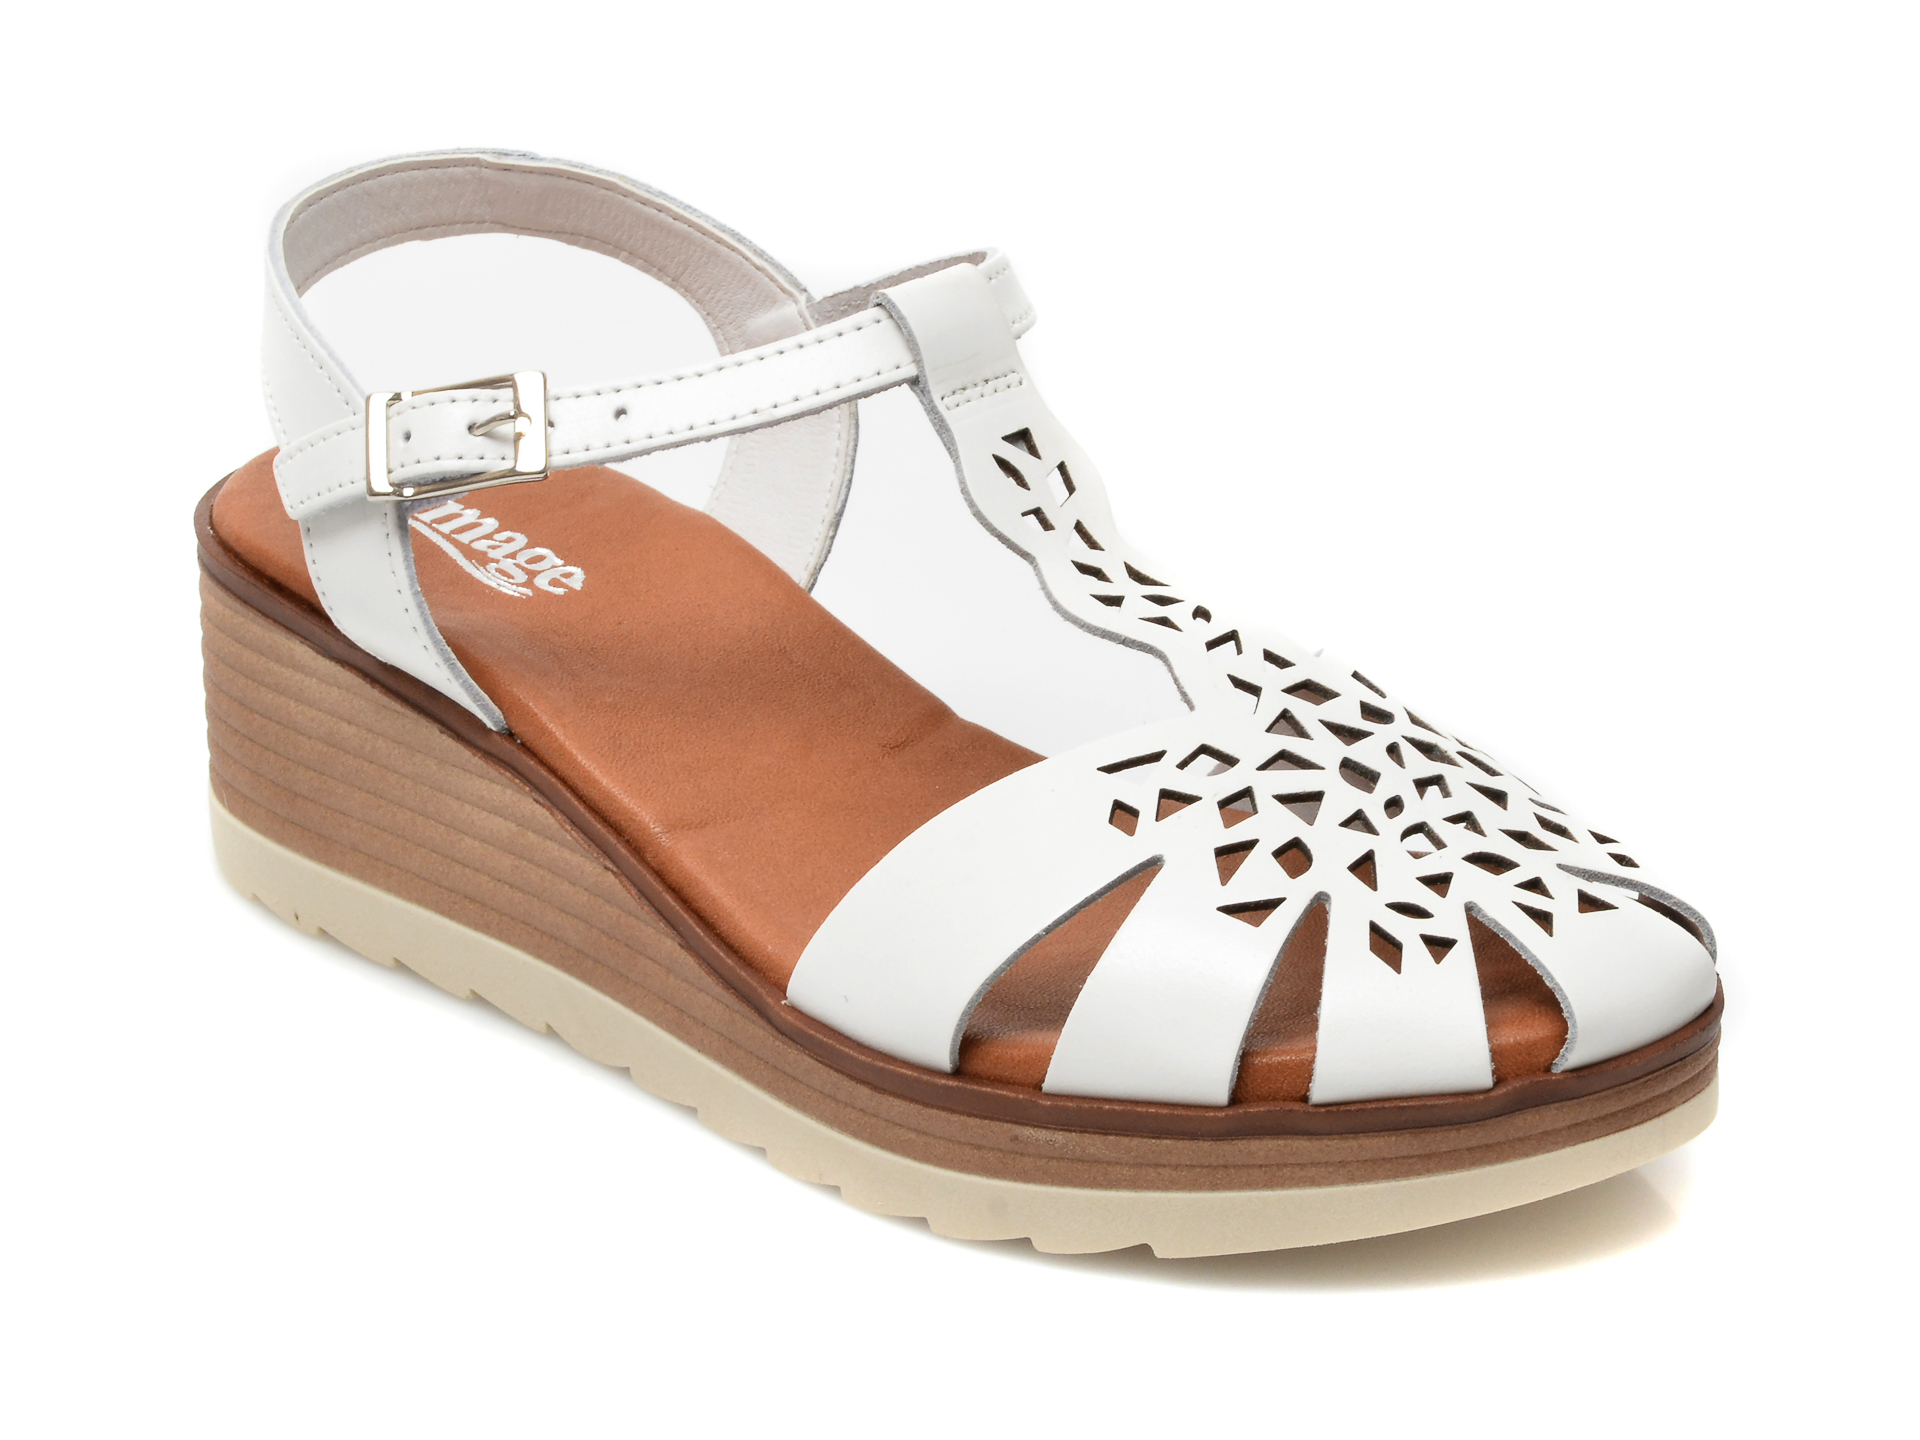 Pantofi sport EPICA bej, Q2110, din material textil si piele naturala Epica